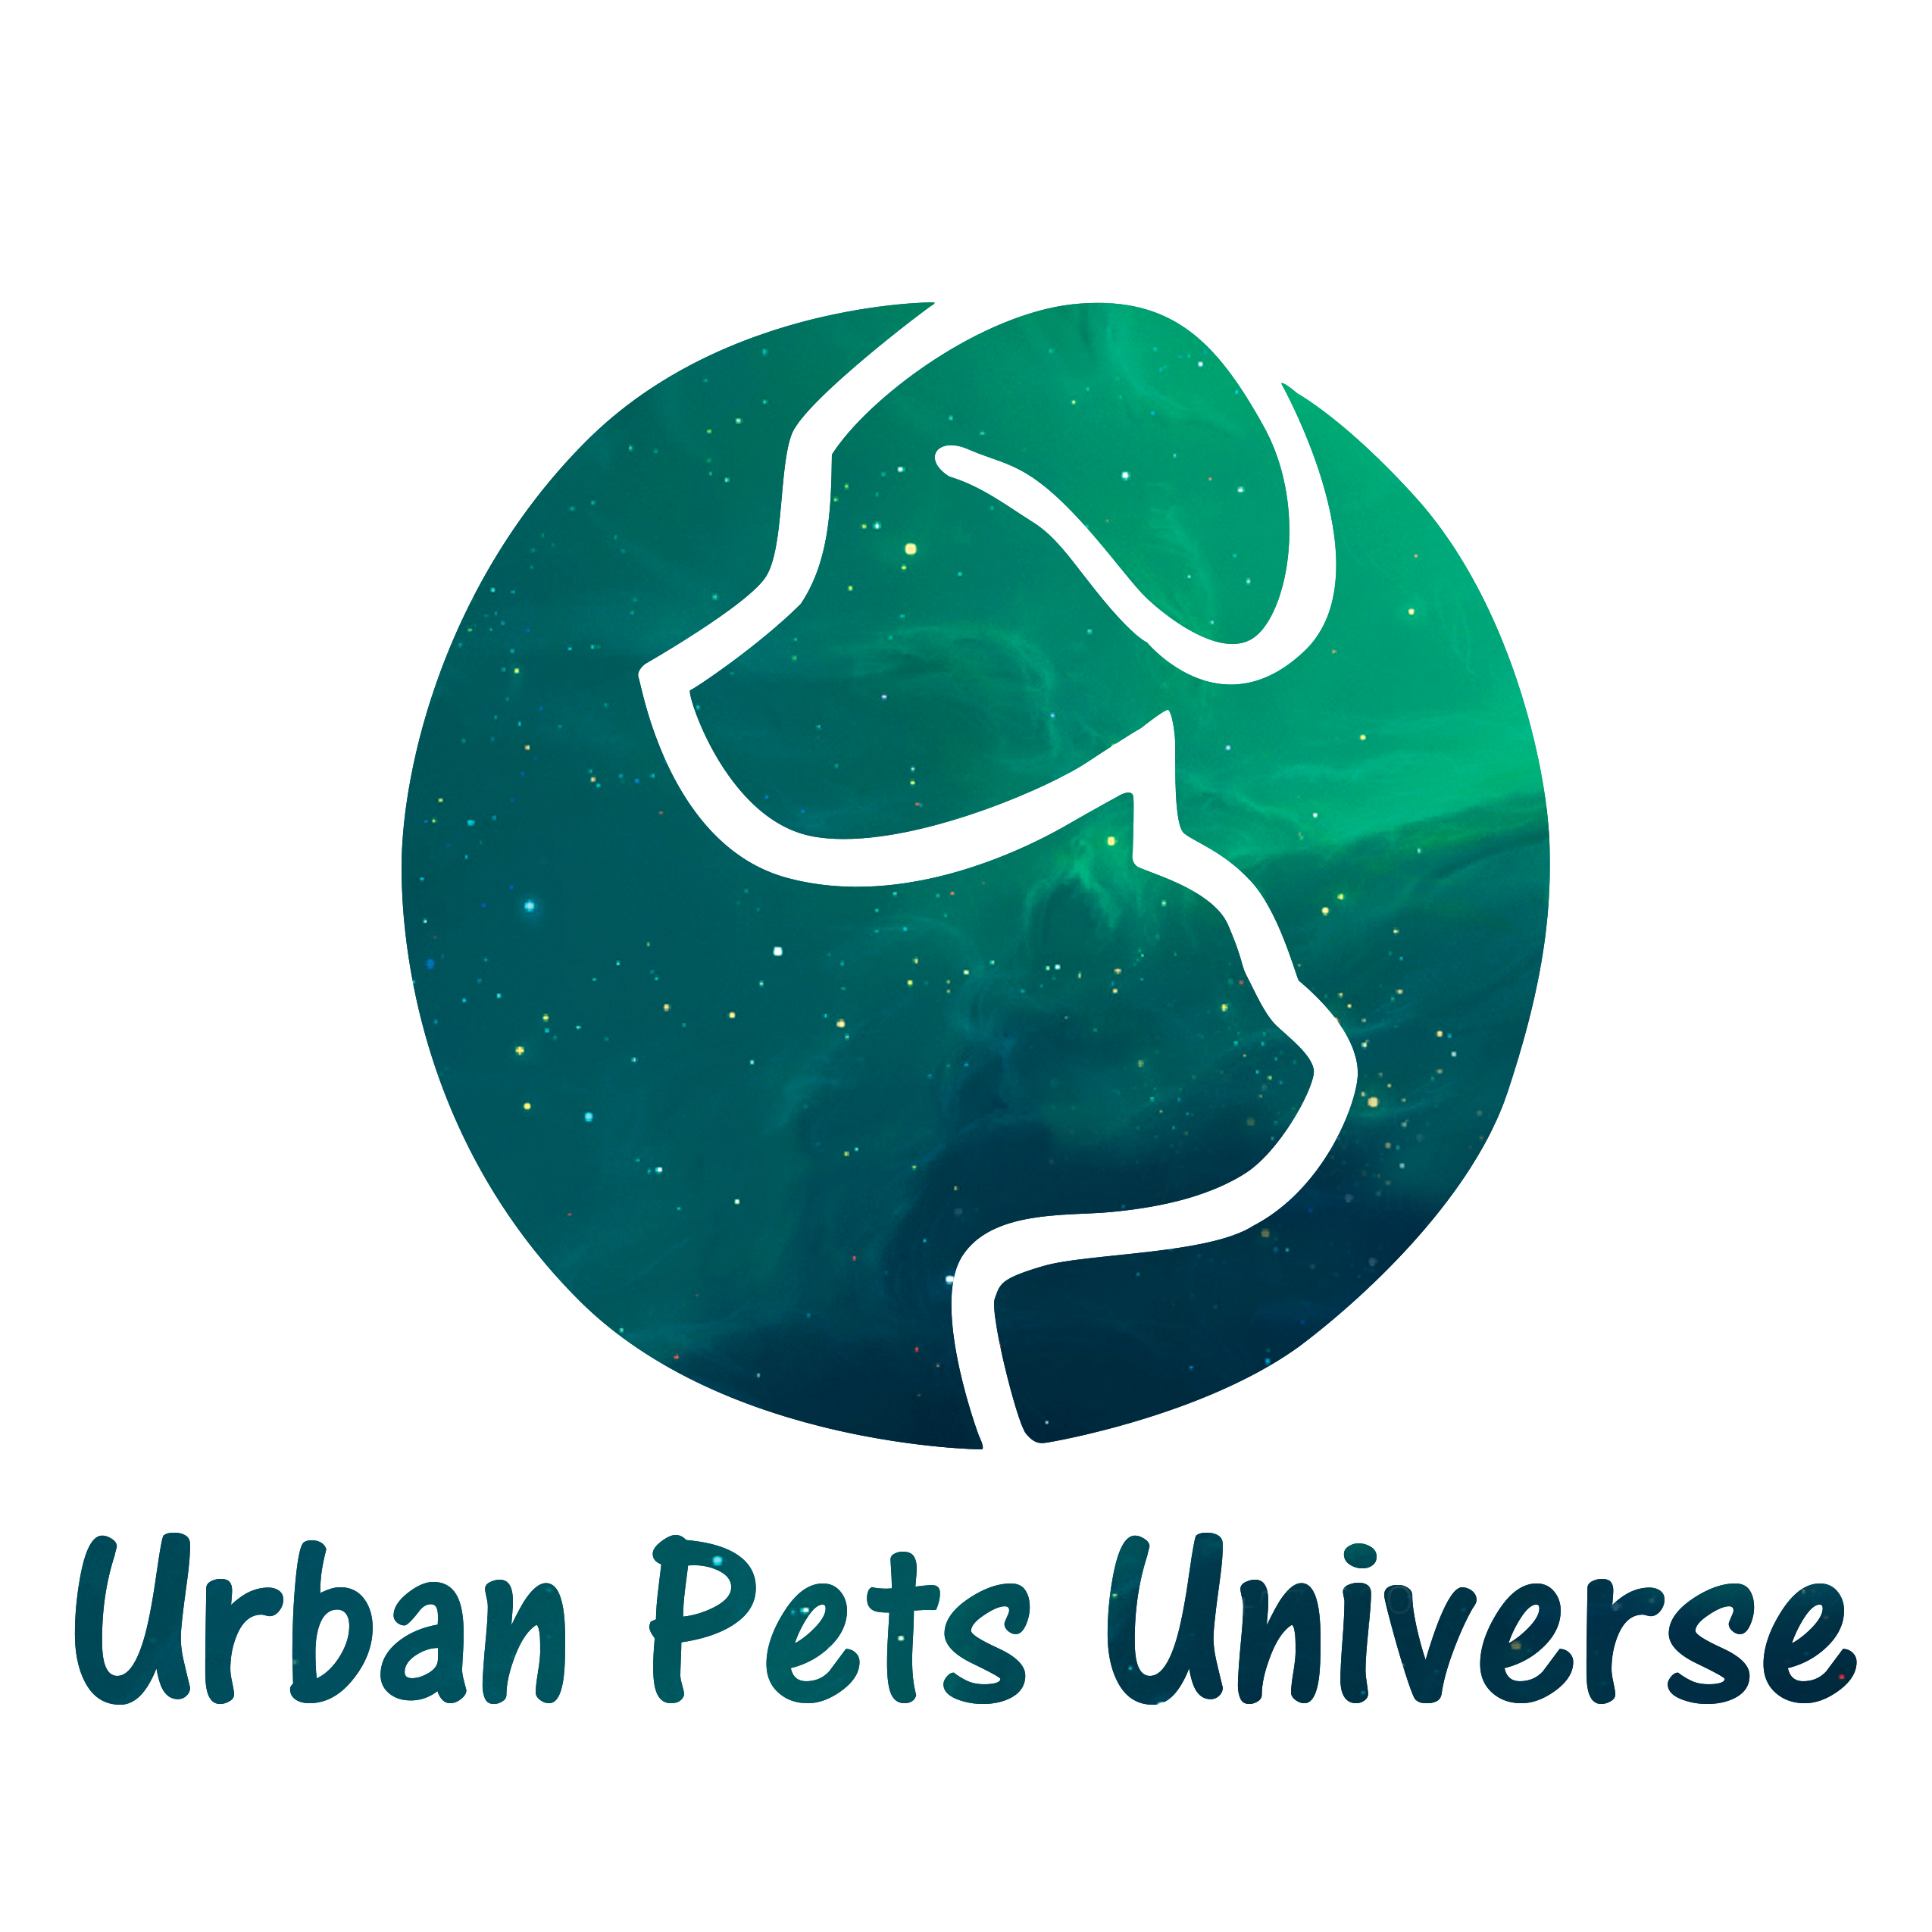 https://www.urbanpetsuniverse.com/wp-content/uploads/2019/10/urban-pets-universe-logo-with-name.png